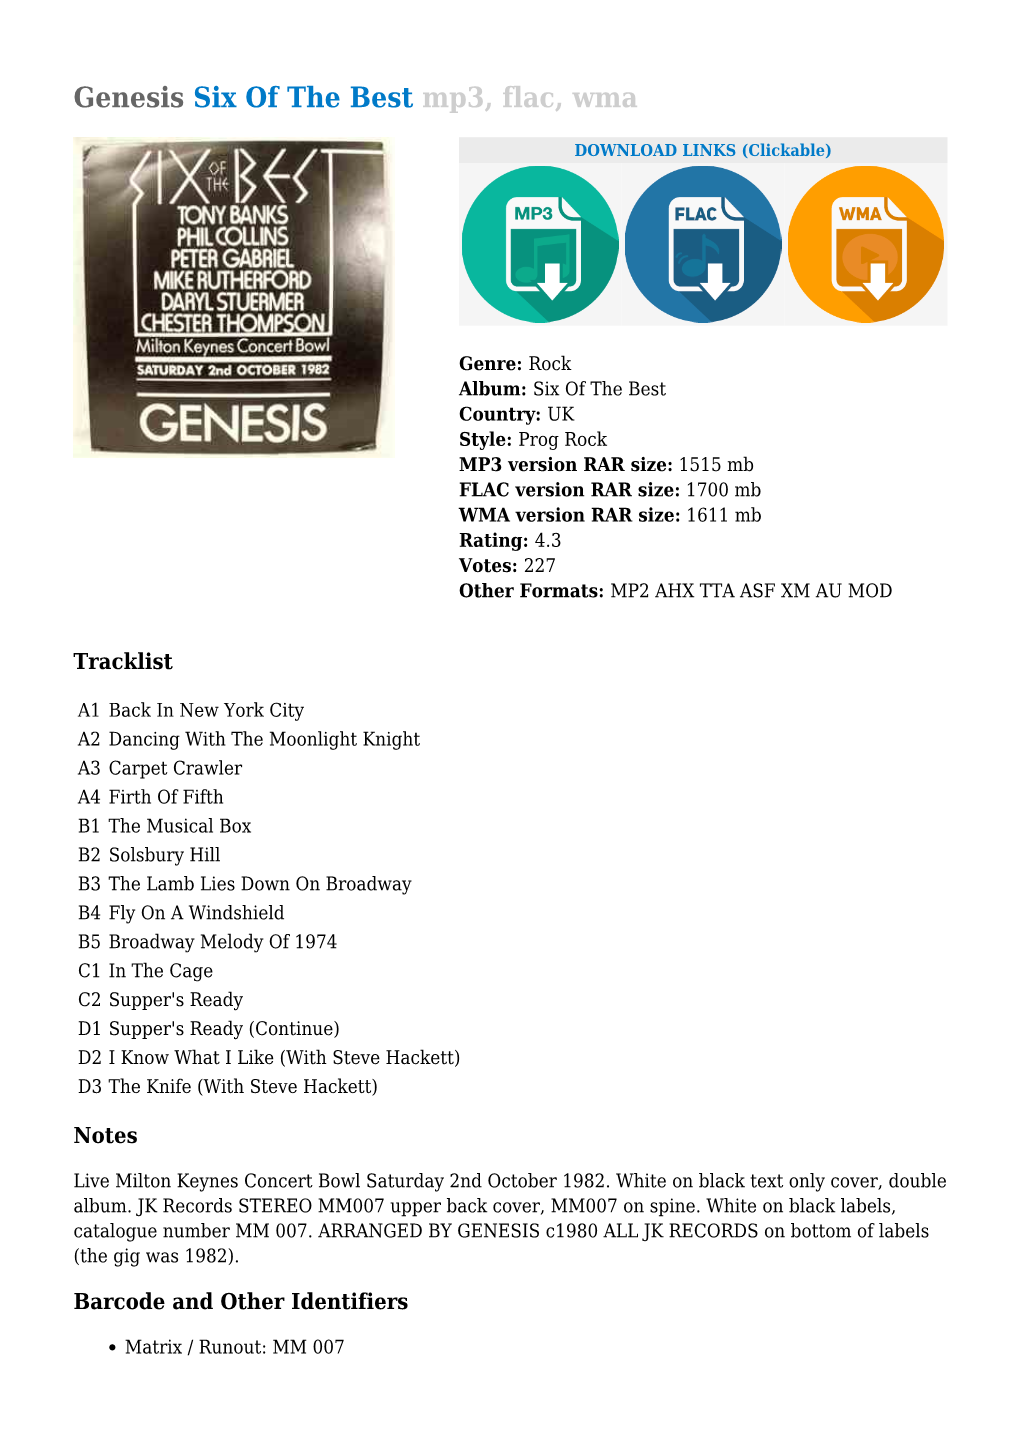 Genesis Six of the Best Mp3, Flac, Wma